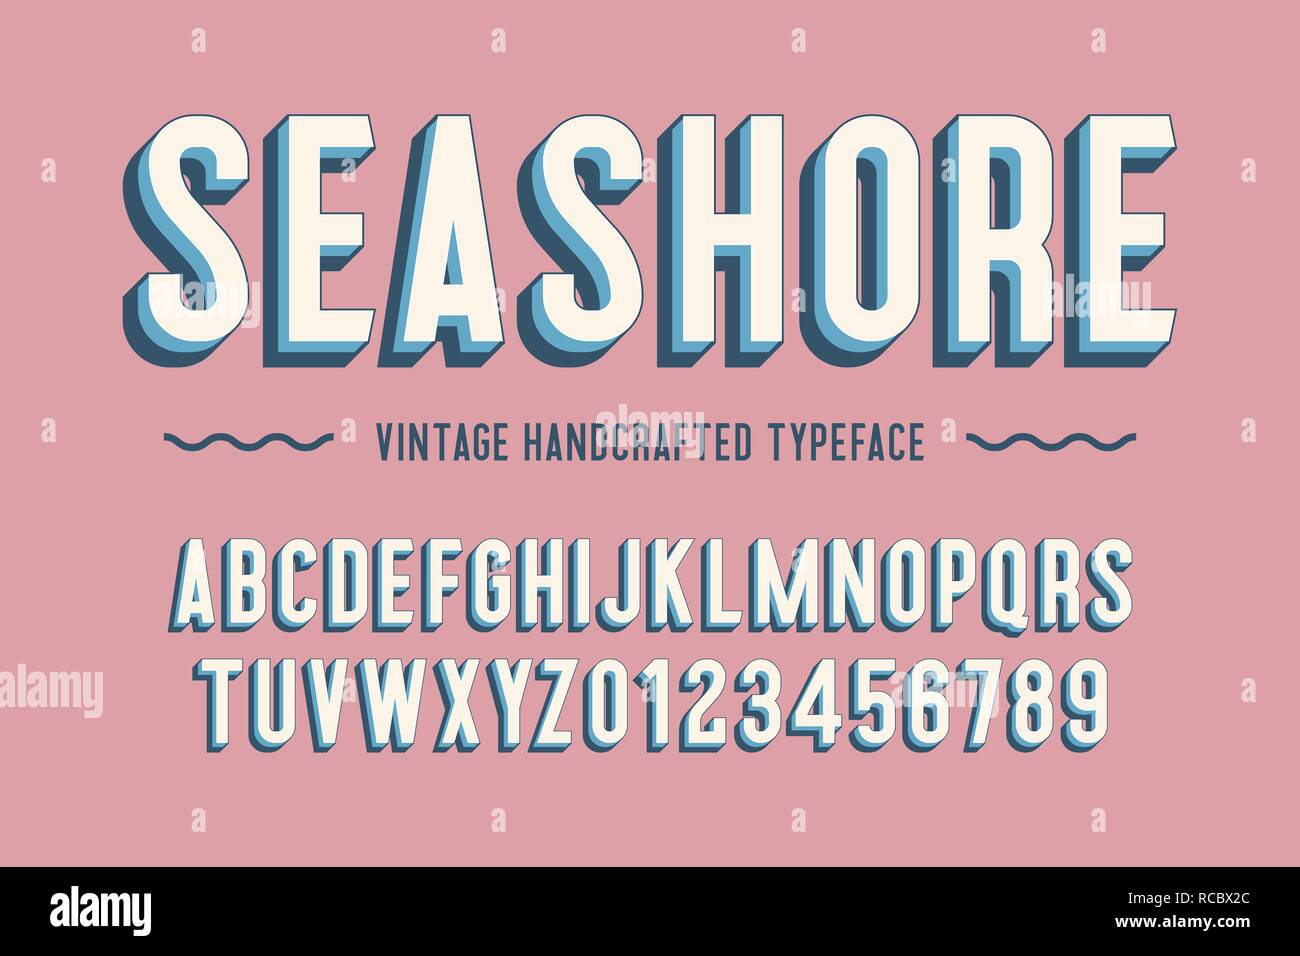 Seashore vintage artigianale a 3d alfabeto. illustrazione vettoriale Illustrazione Vettoriale